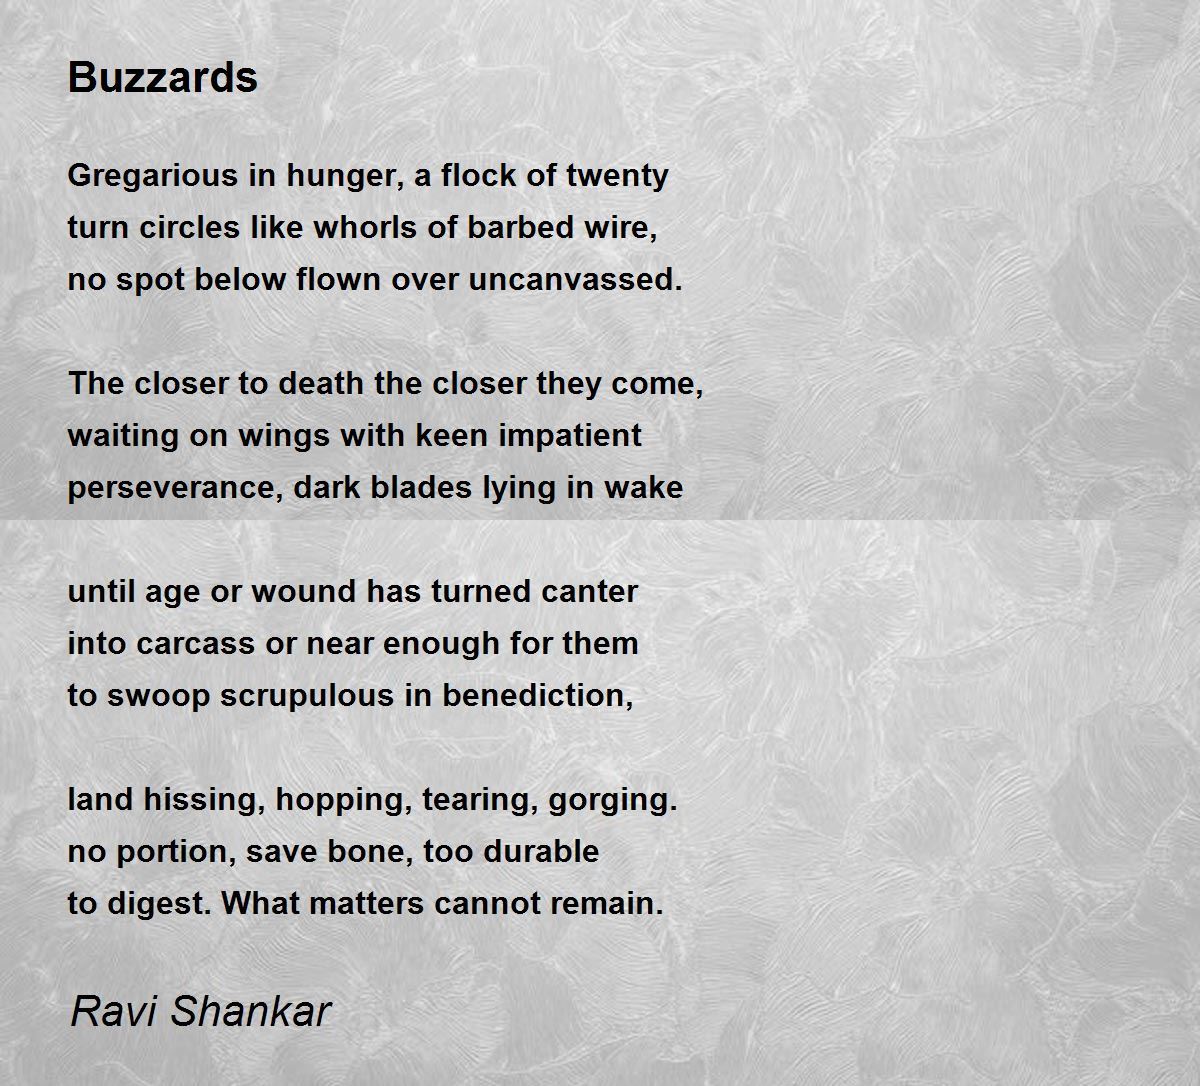 Buzzards - Buzzards Poem by Ravi Shankar